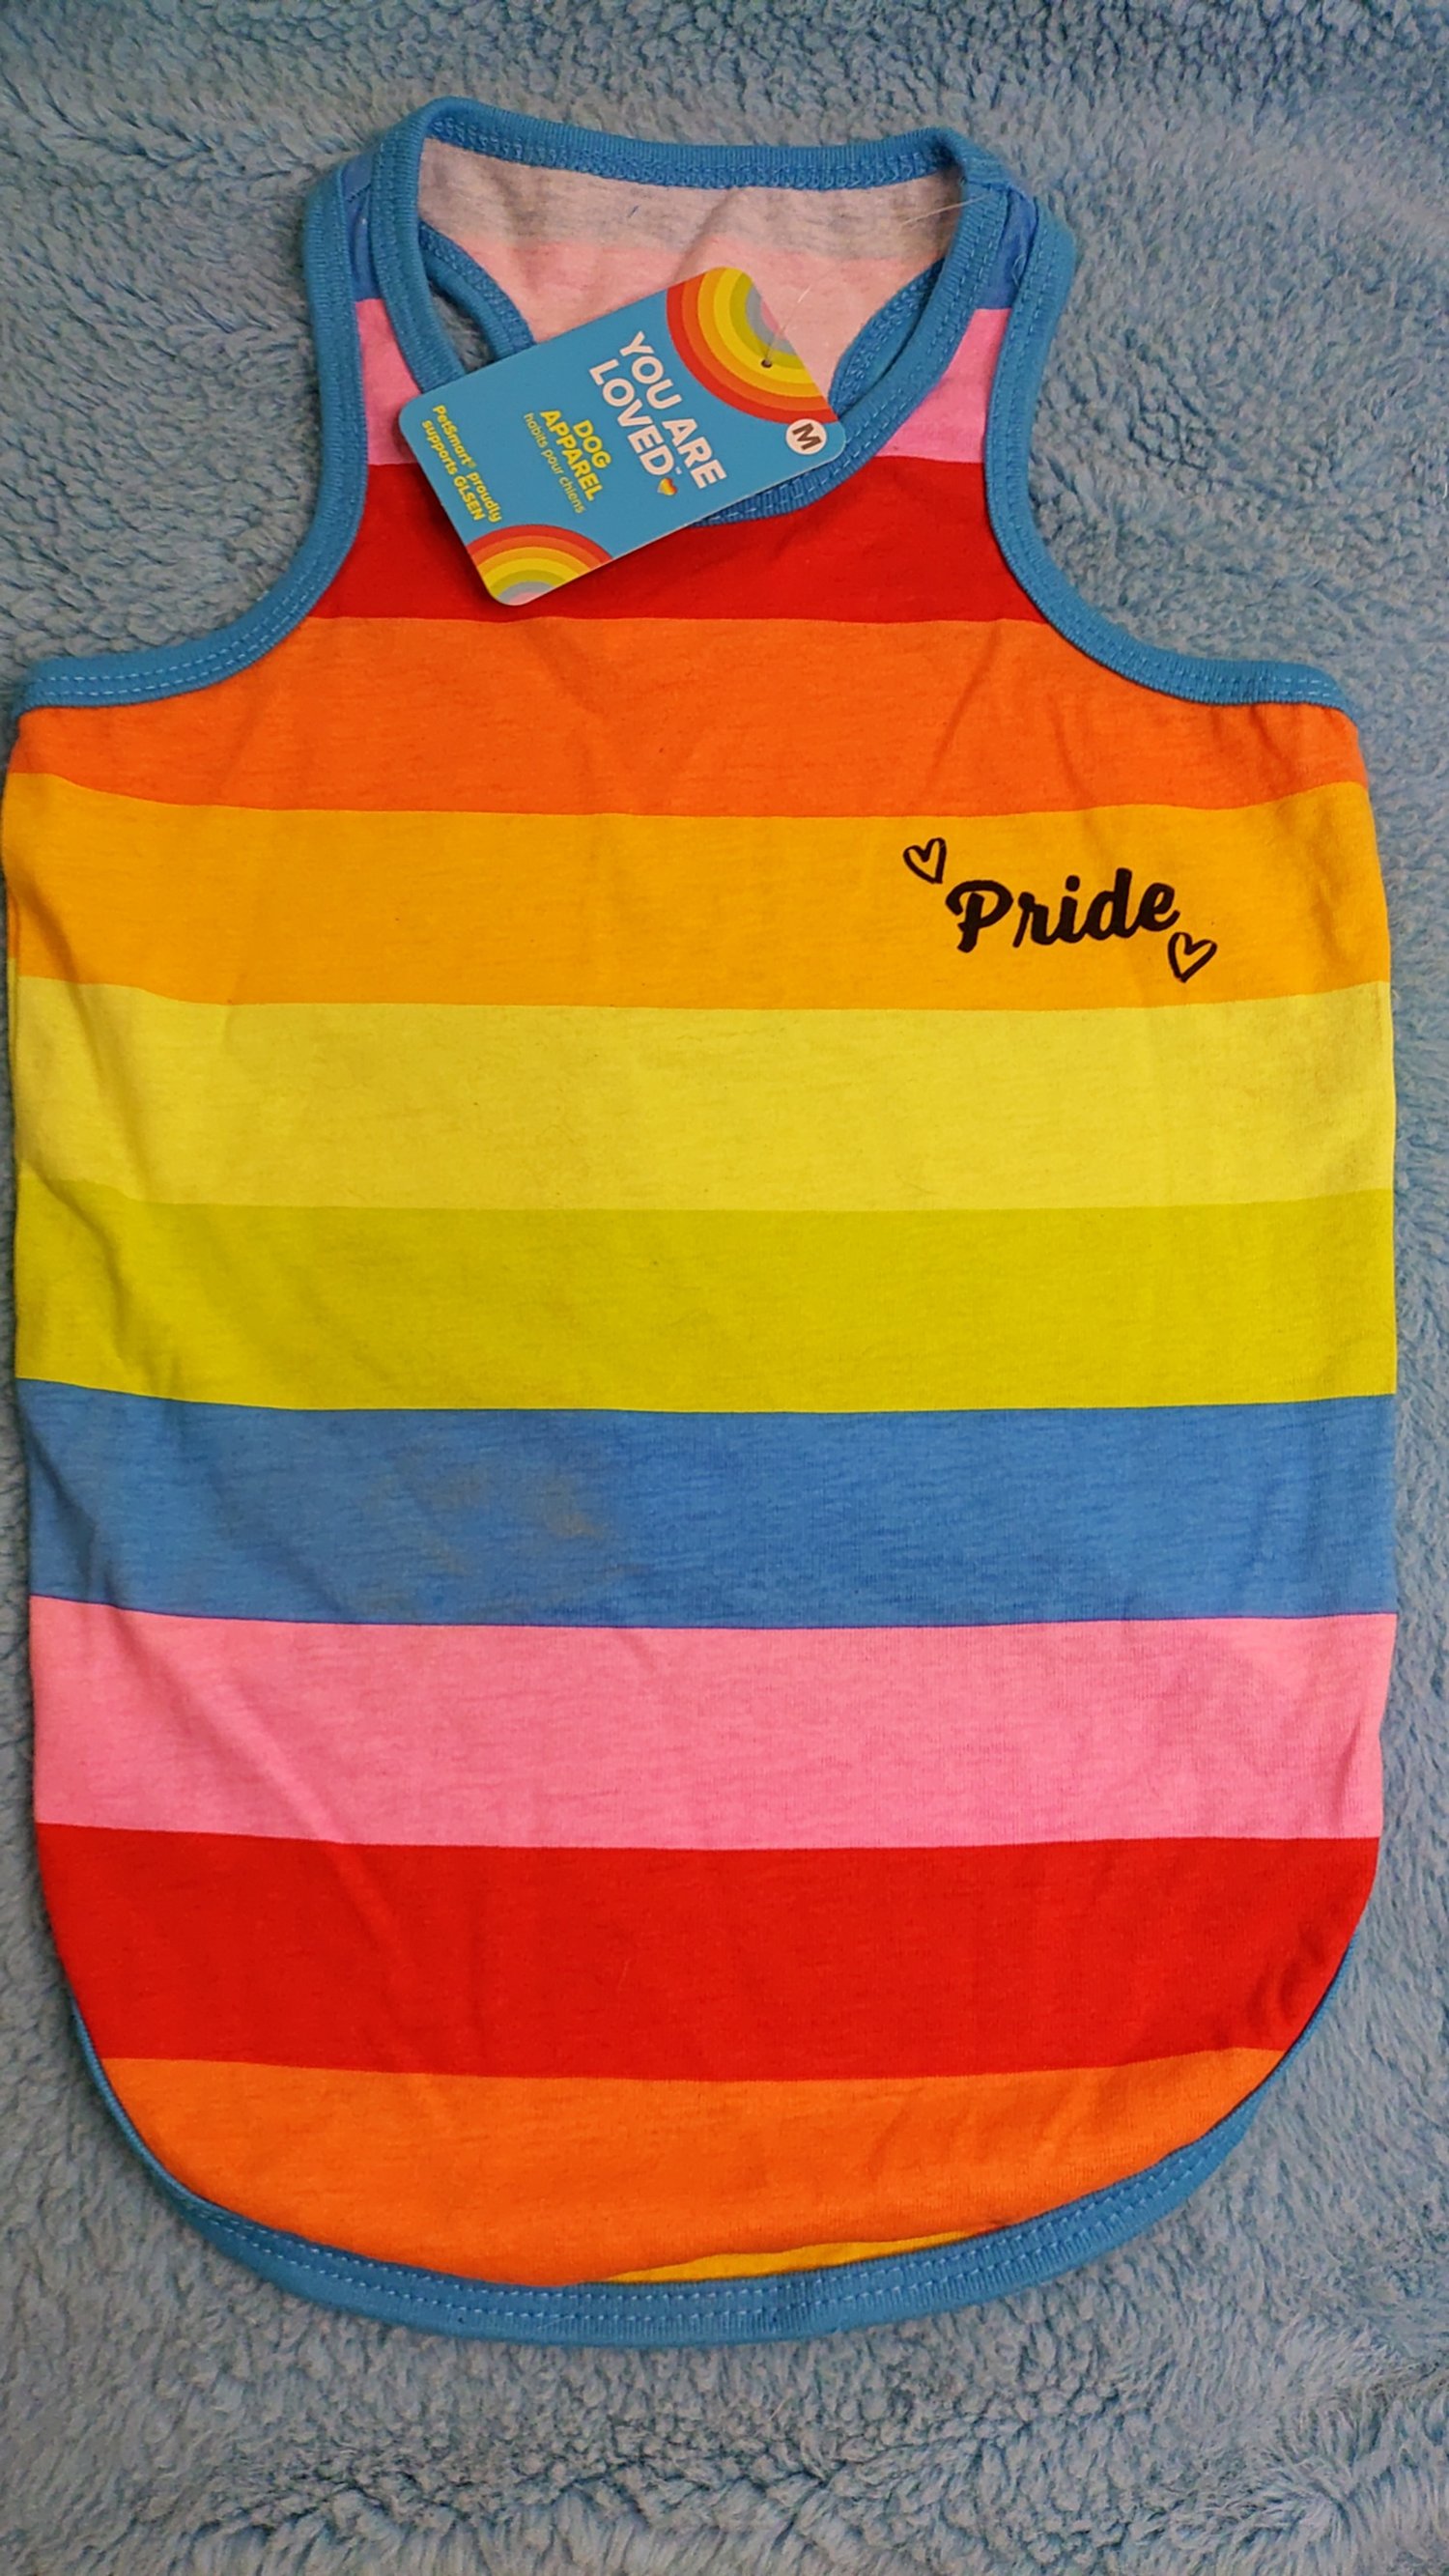 Shirt - Pride $5